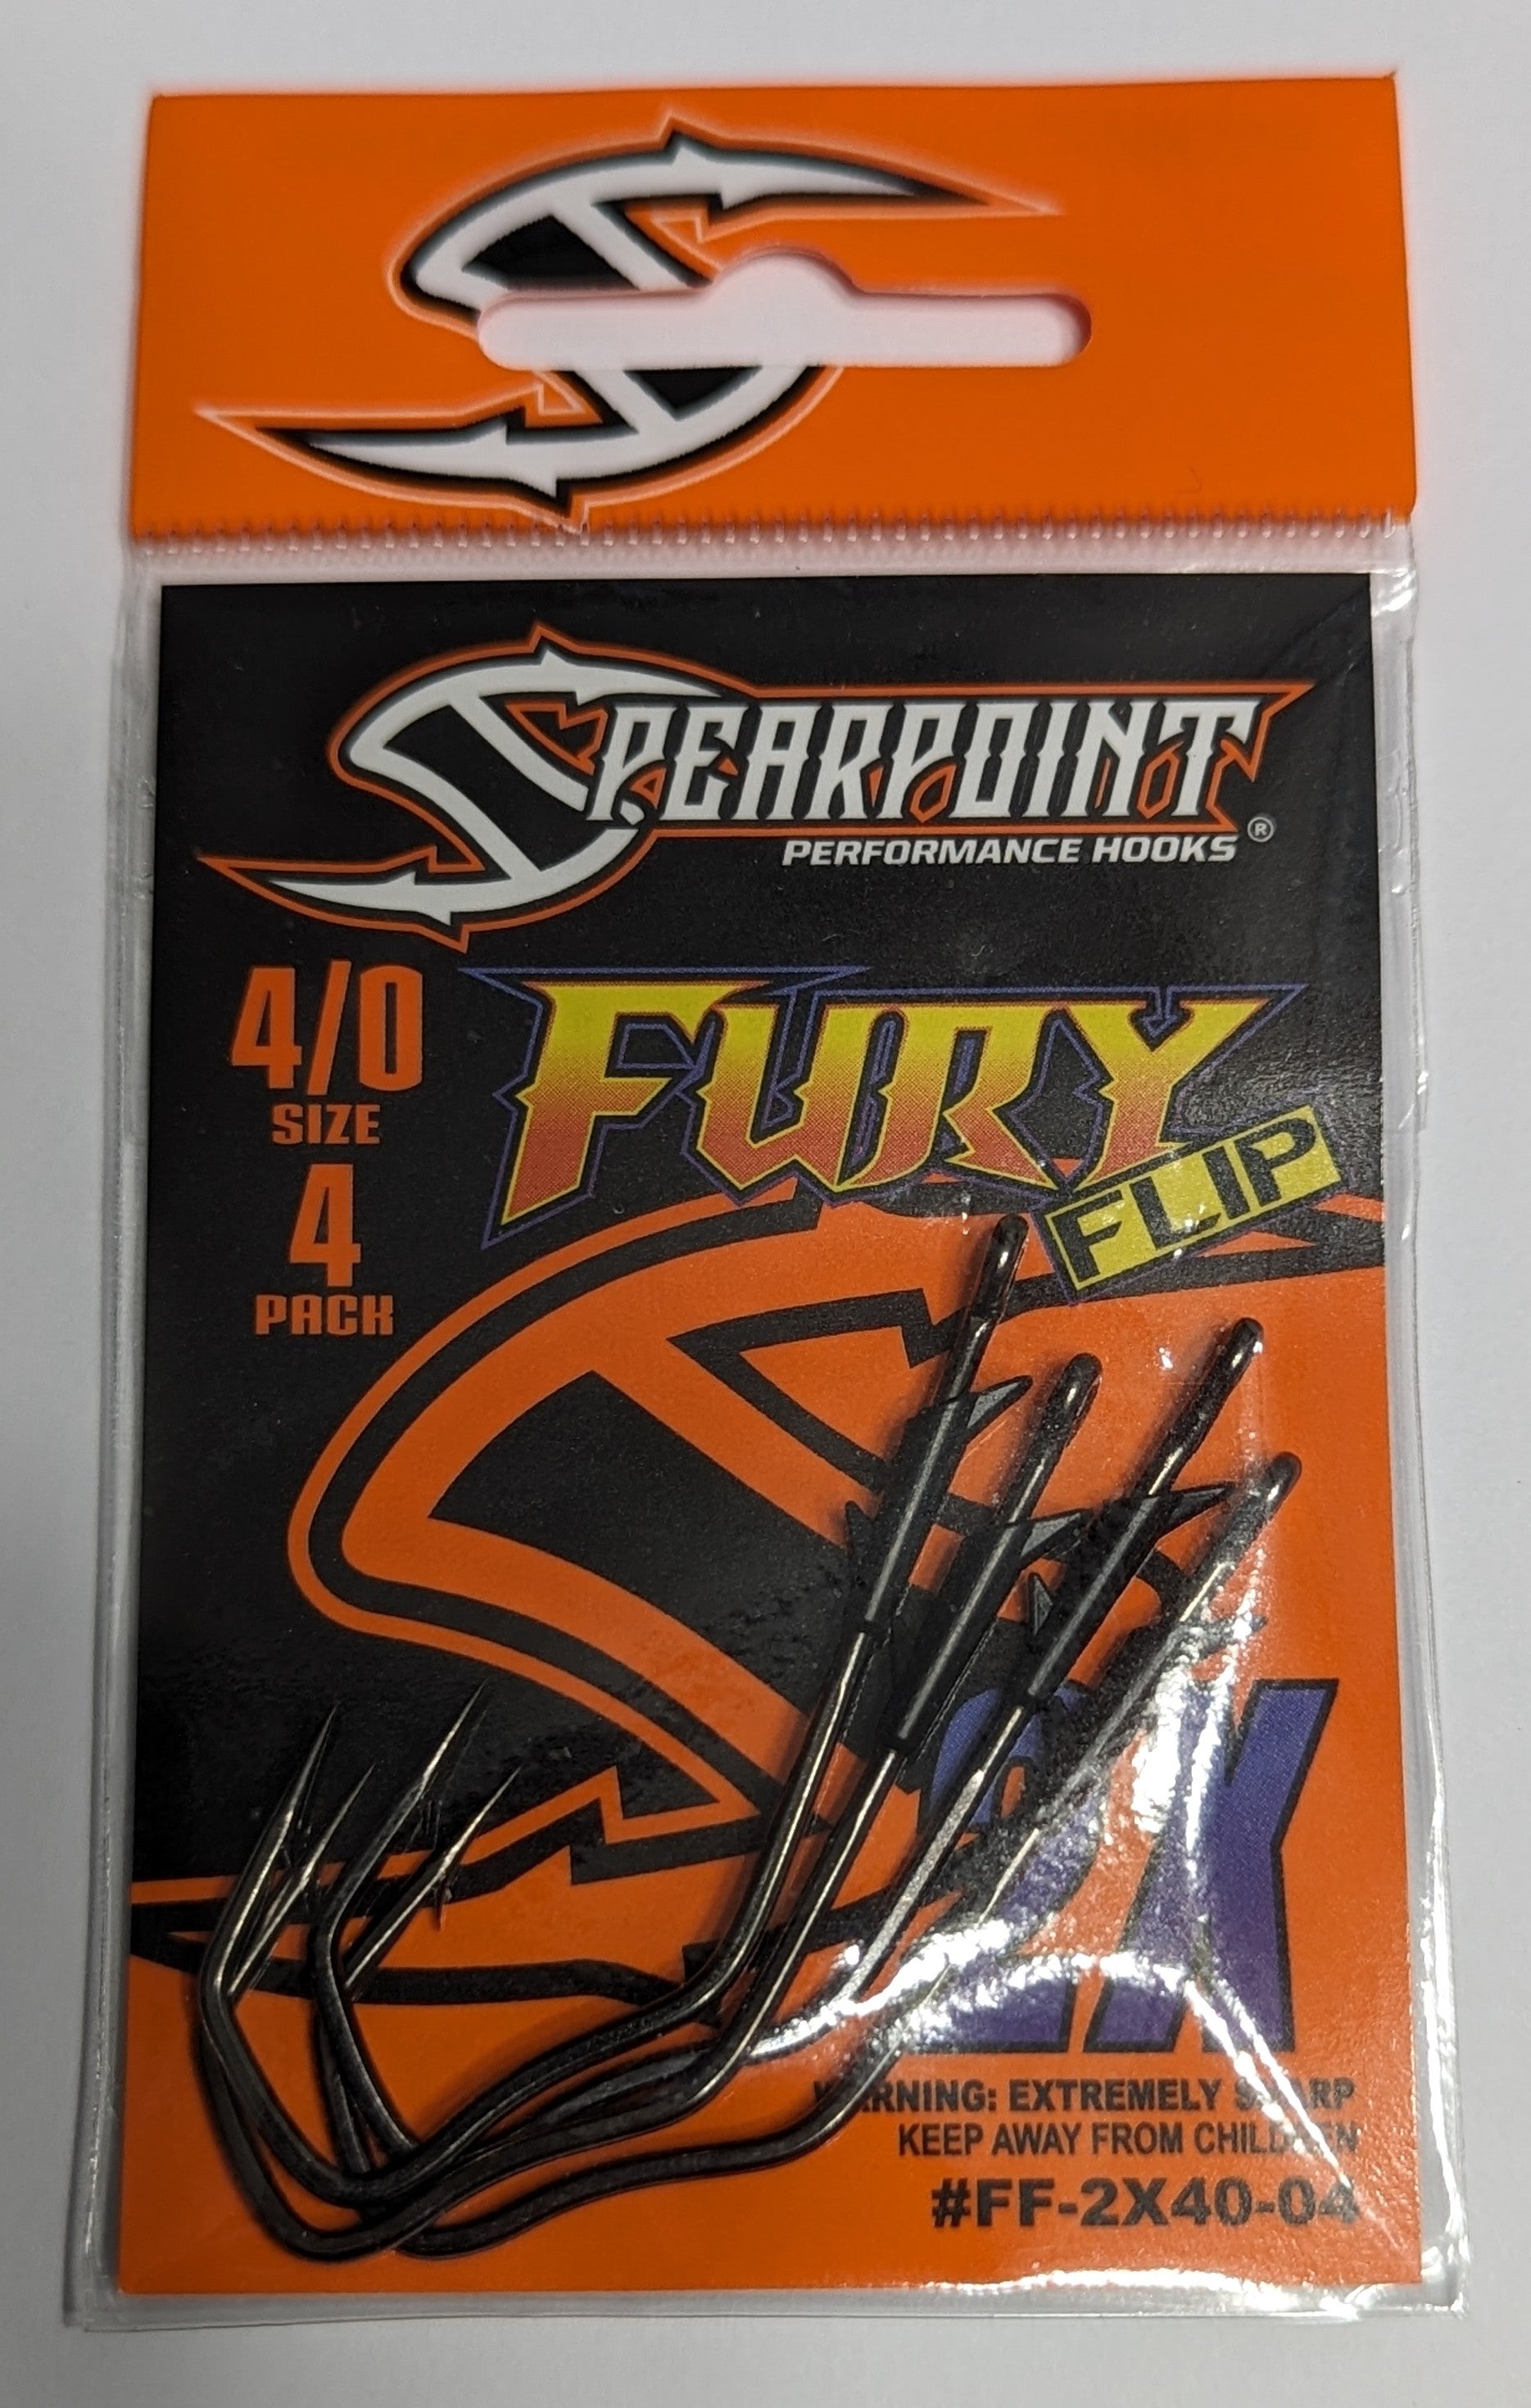 Spearpoint Performance Hooks - Fury Flip 4/0 4 pack – Big City Fishing  Gear, LLC